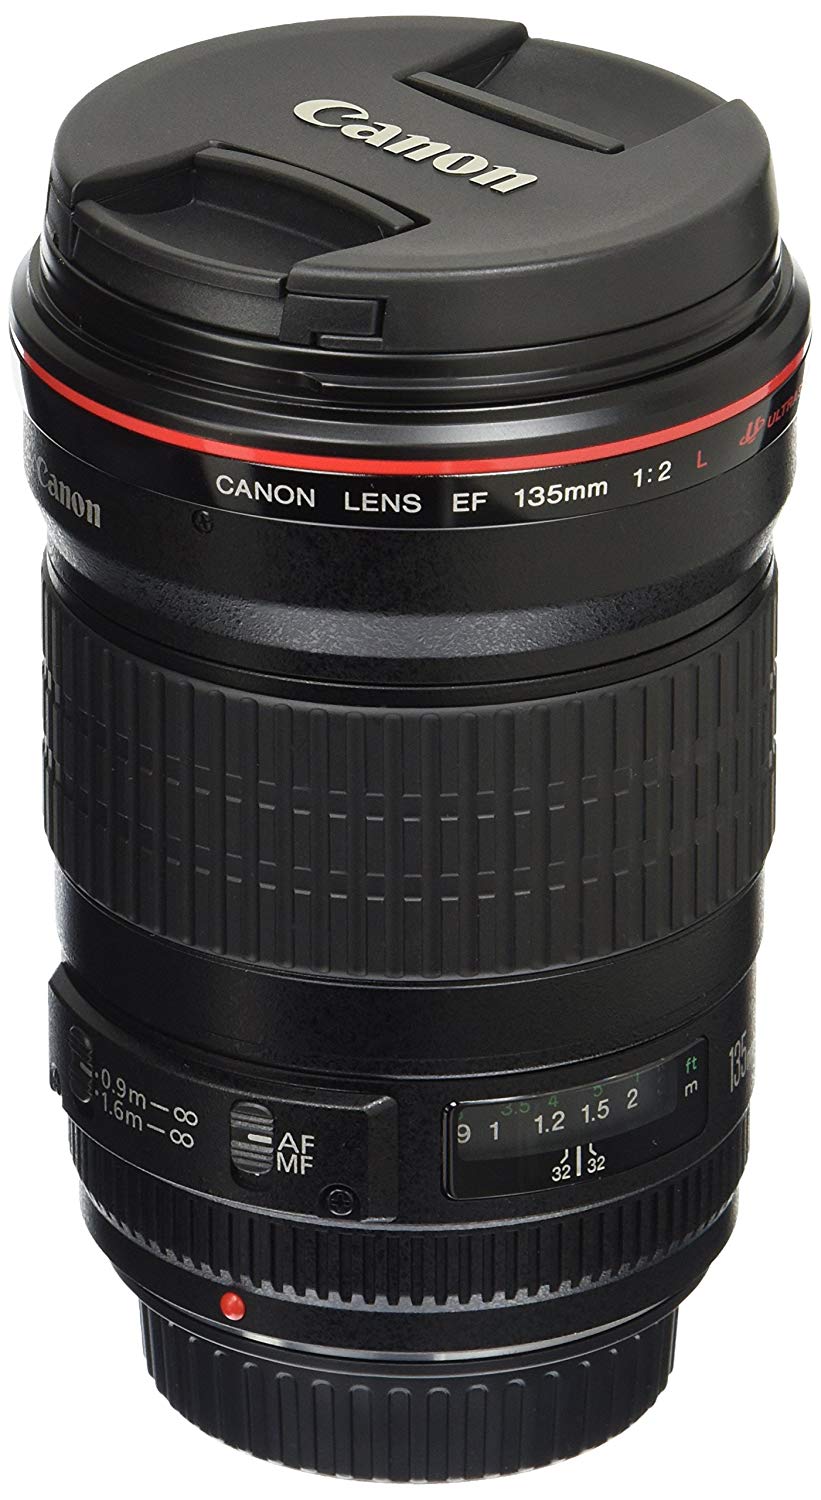 Canon EF 135mm f/2L USM Lens for SLR Cameras - Fixed